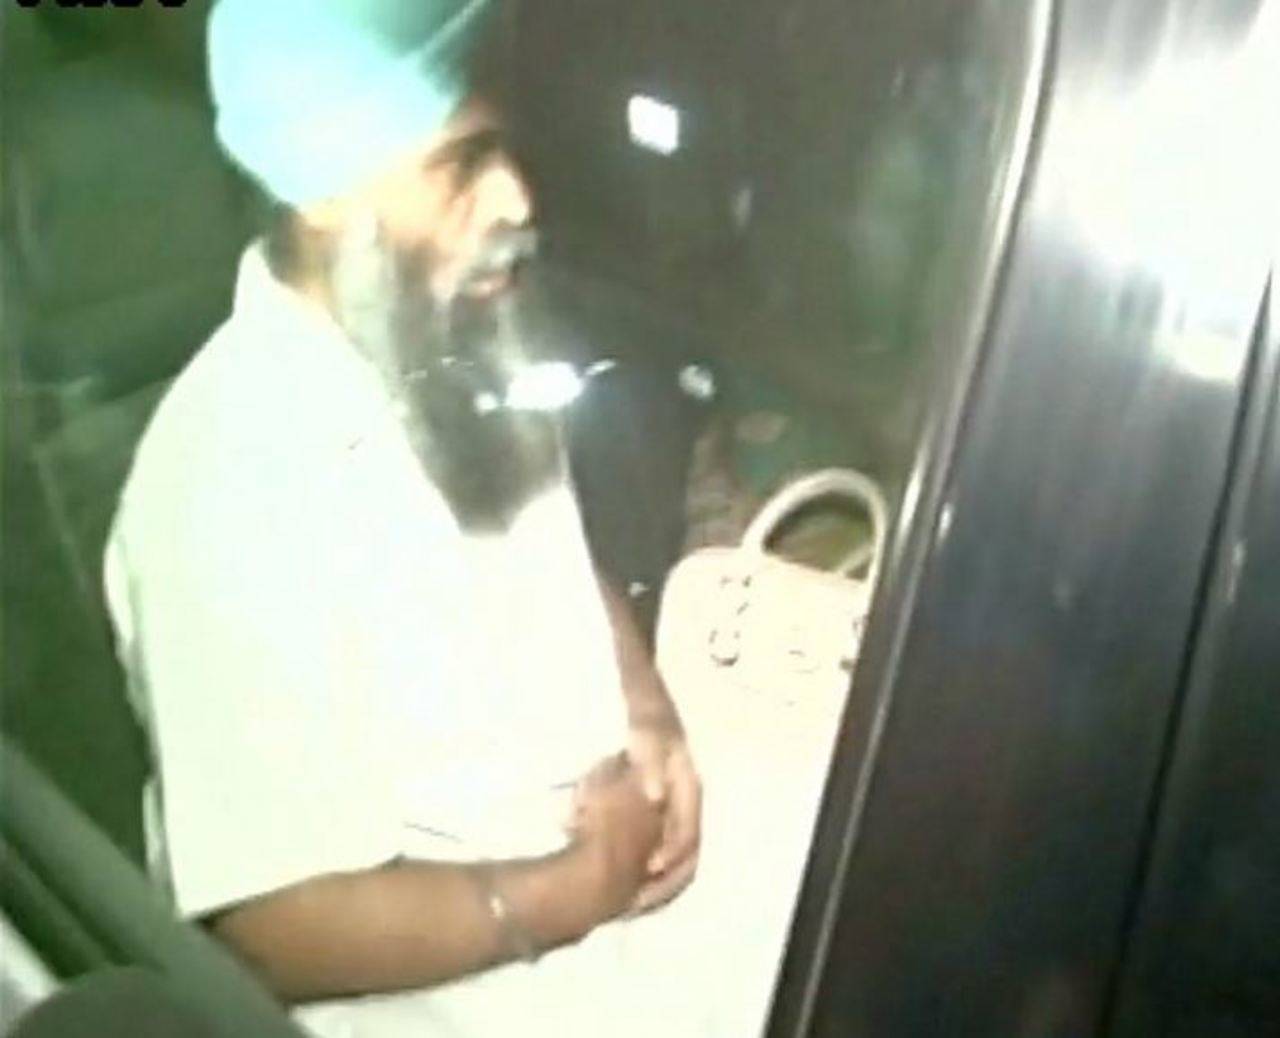 1993 Delhi blast convict Devinder Pal Singh Bhullar gets 21-day parole |  India News - Times of India